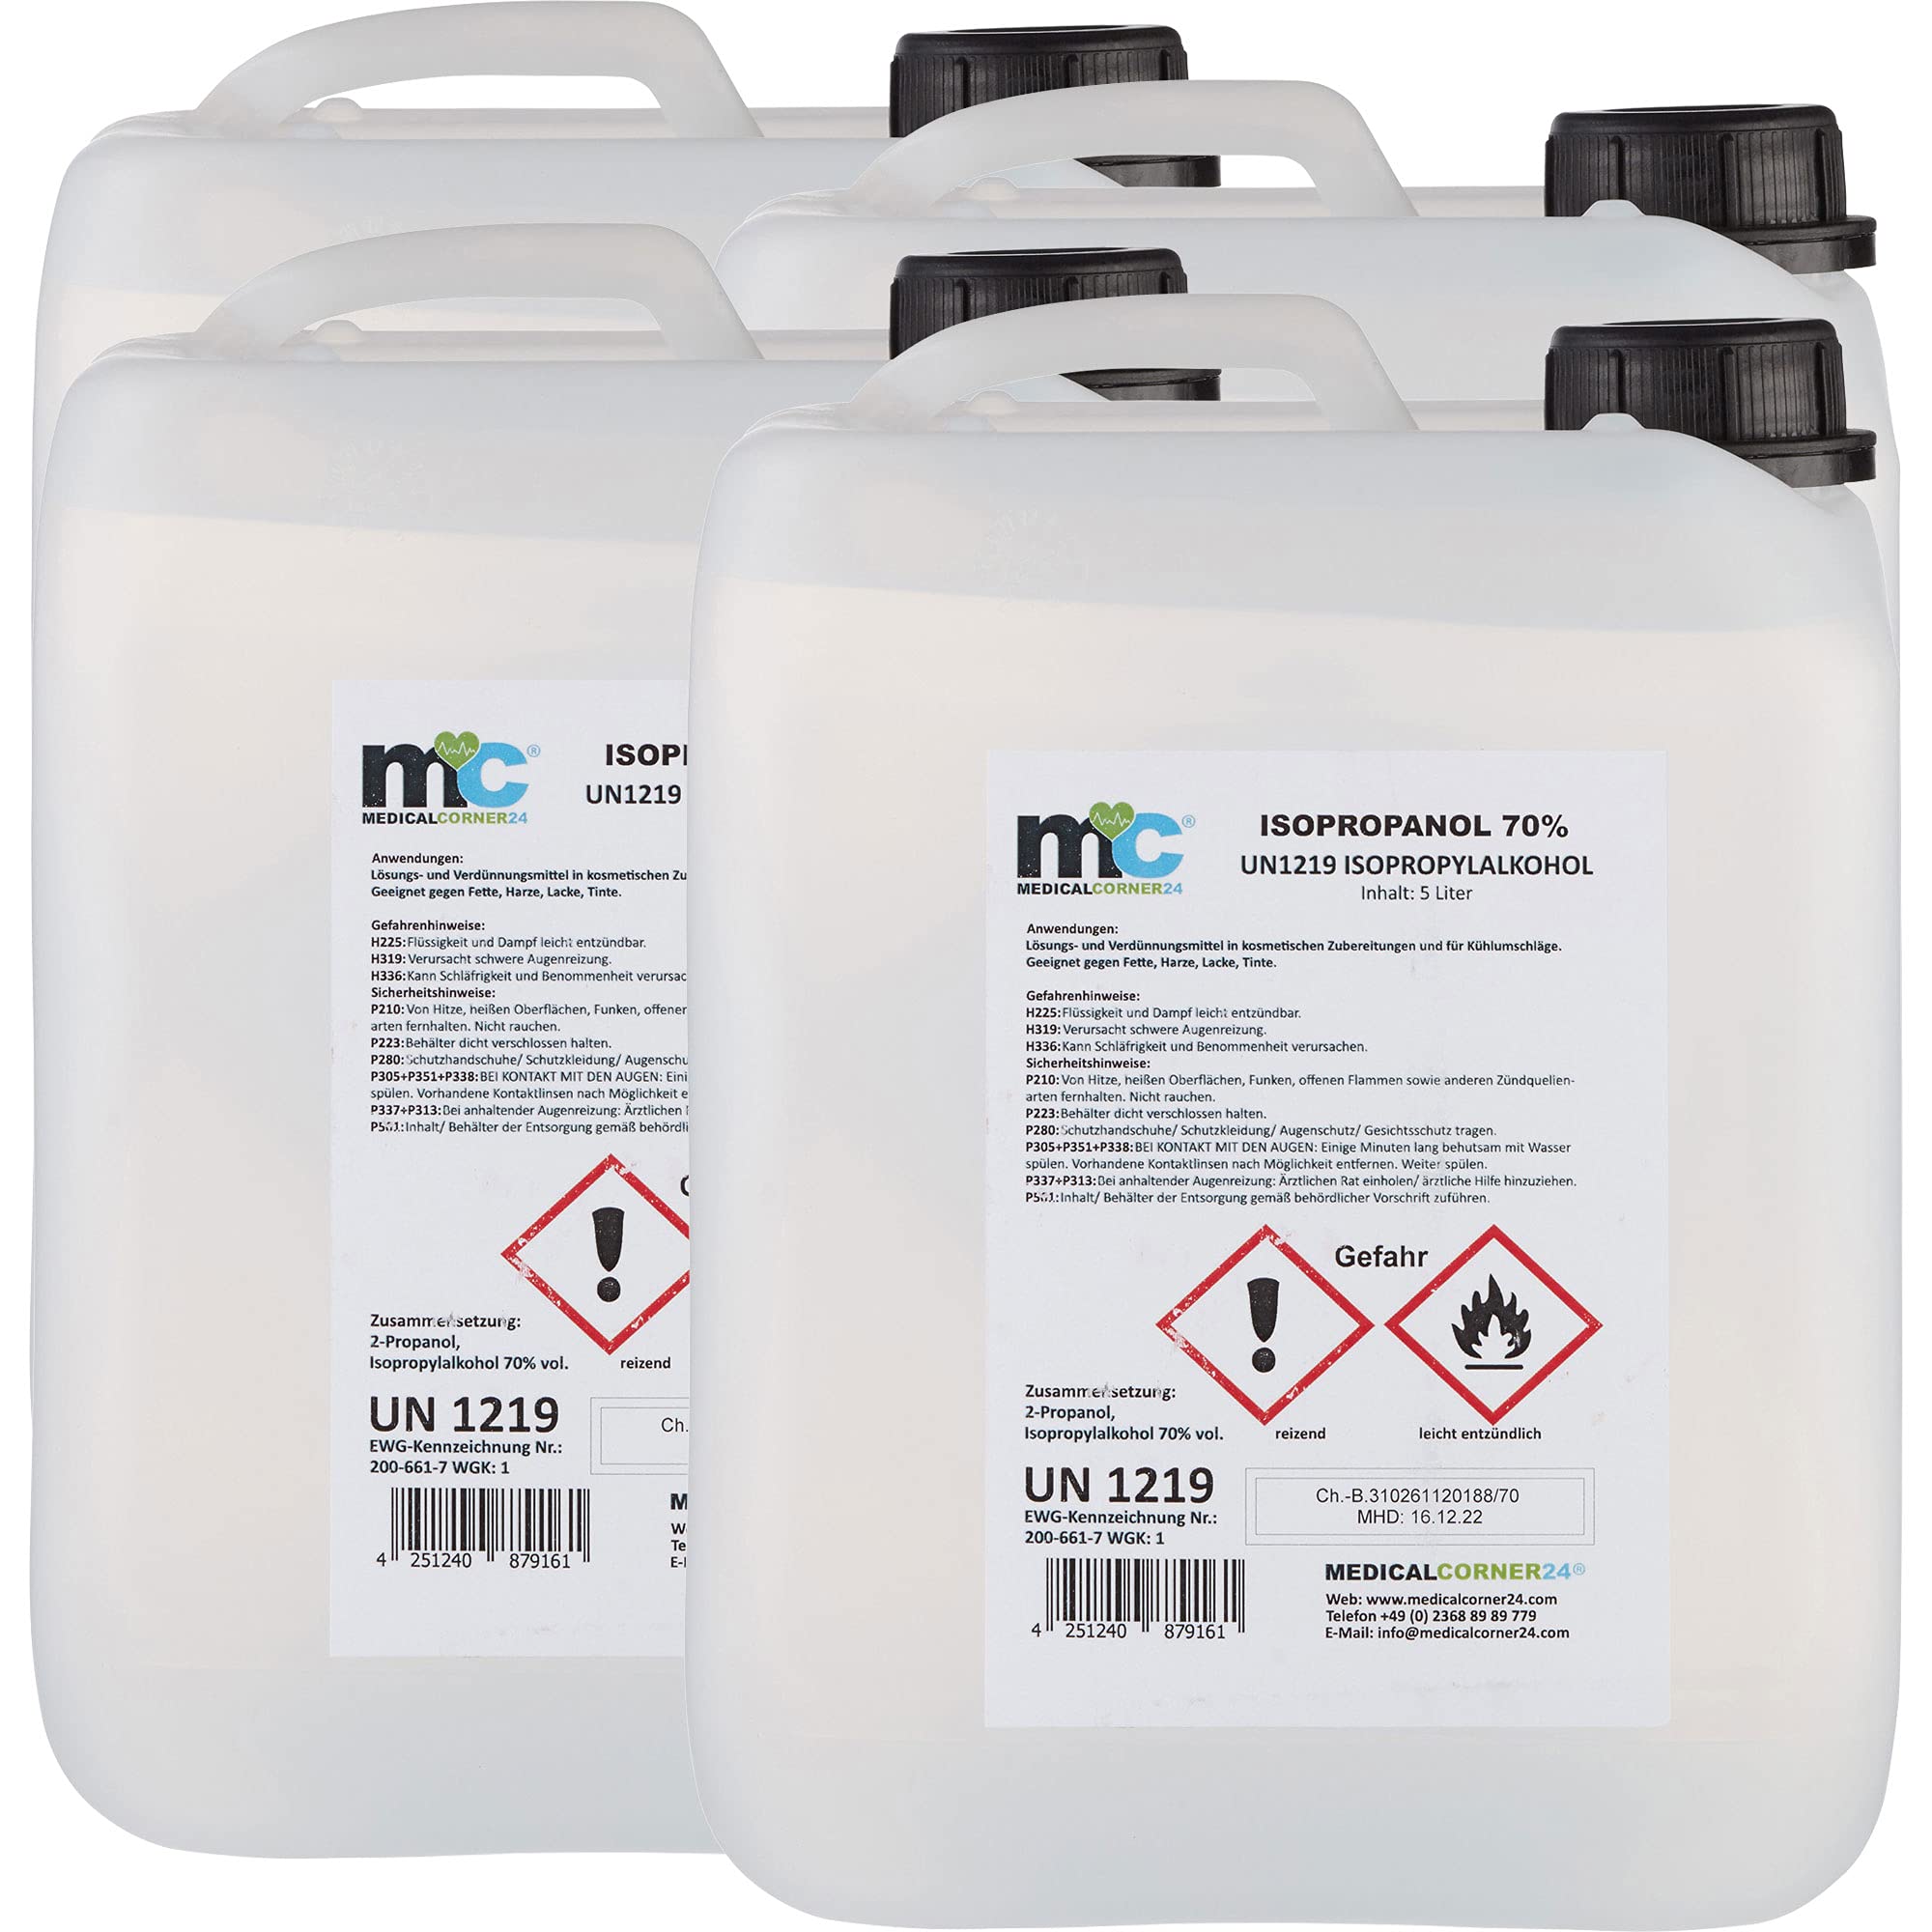 Medicalcorner24® Isopropanol 70% Isopropylalkohol 4 x 5 Liter Kanister, Alkohol